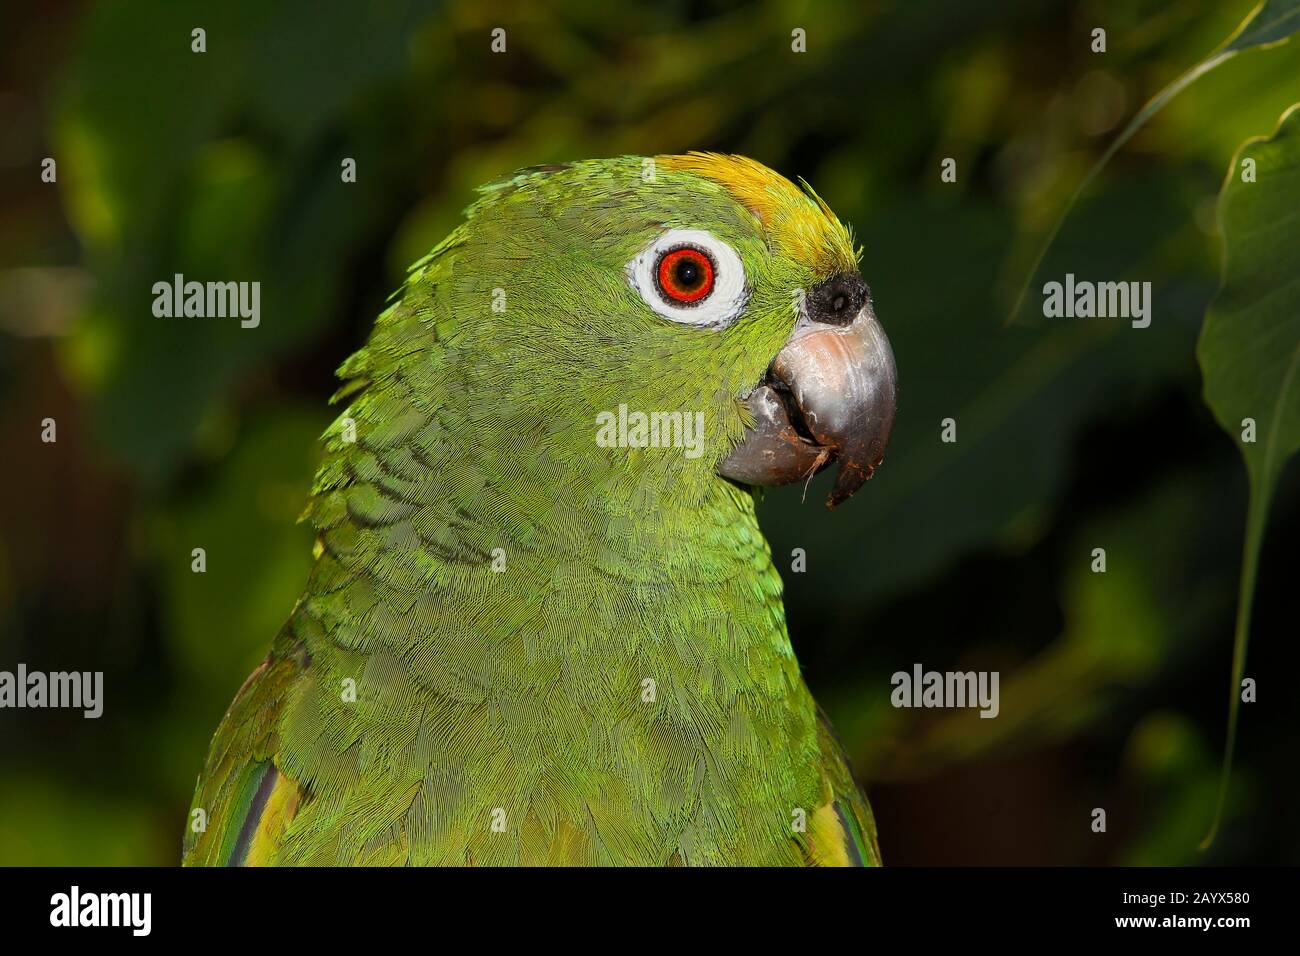 Yellow-crowned Amazon Parrot, amazona ochrocephala, Adult, close-up of Head Stock Photo